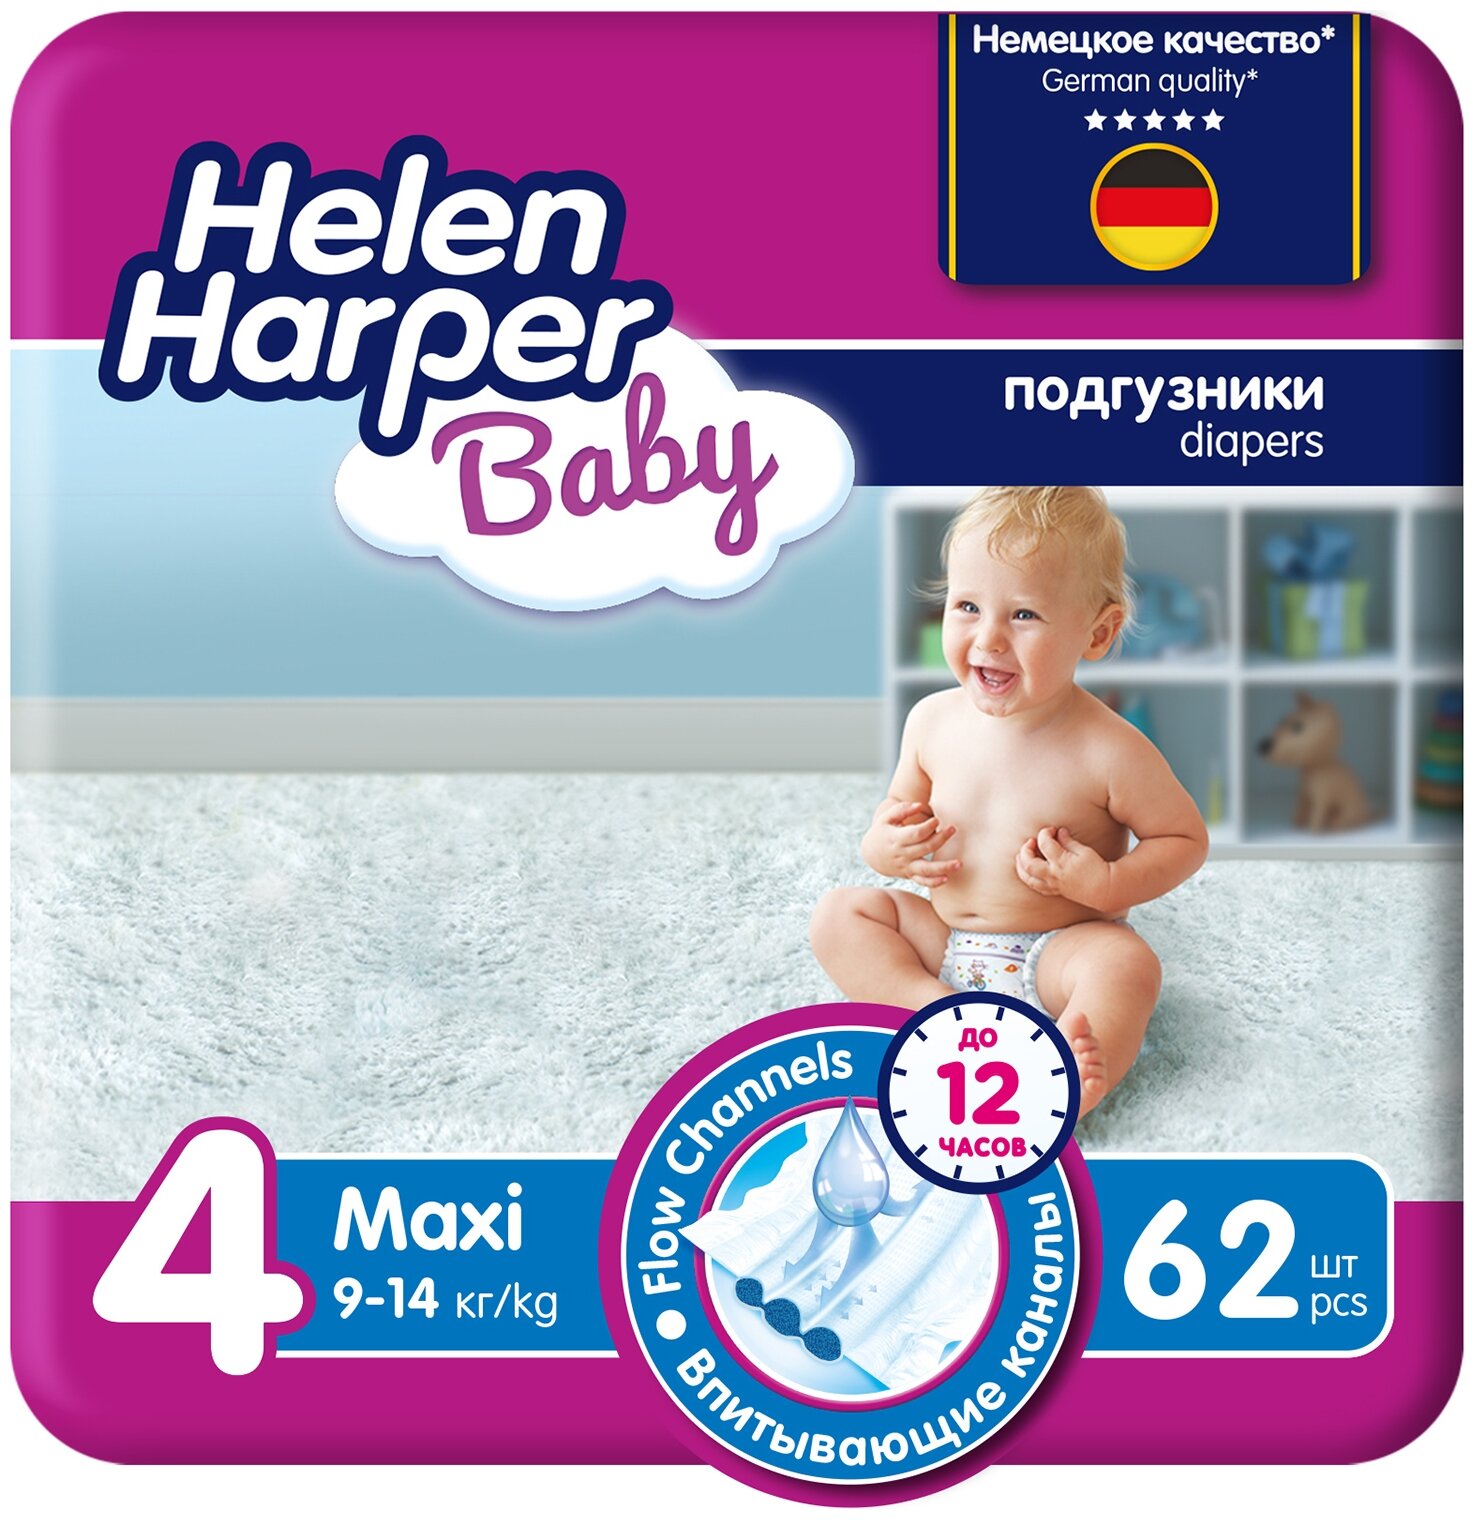 HELEN HARPER BABY Подгузники размер 4 (Maxi) 9-14 кг, 62 шт.